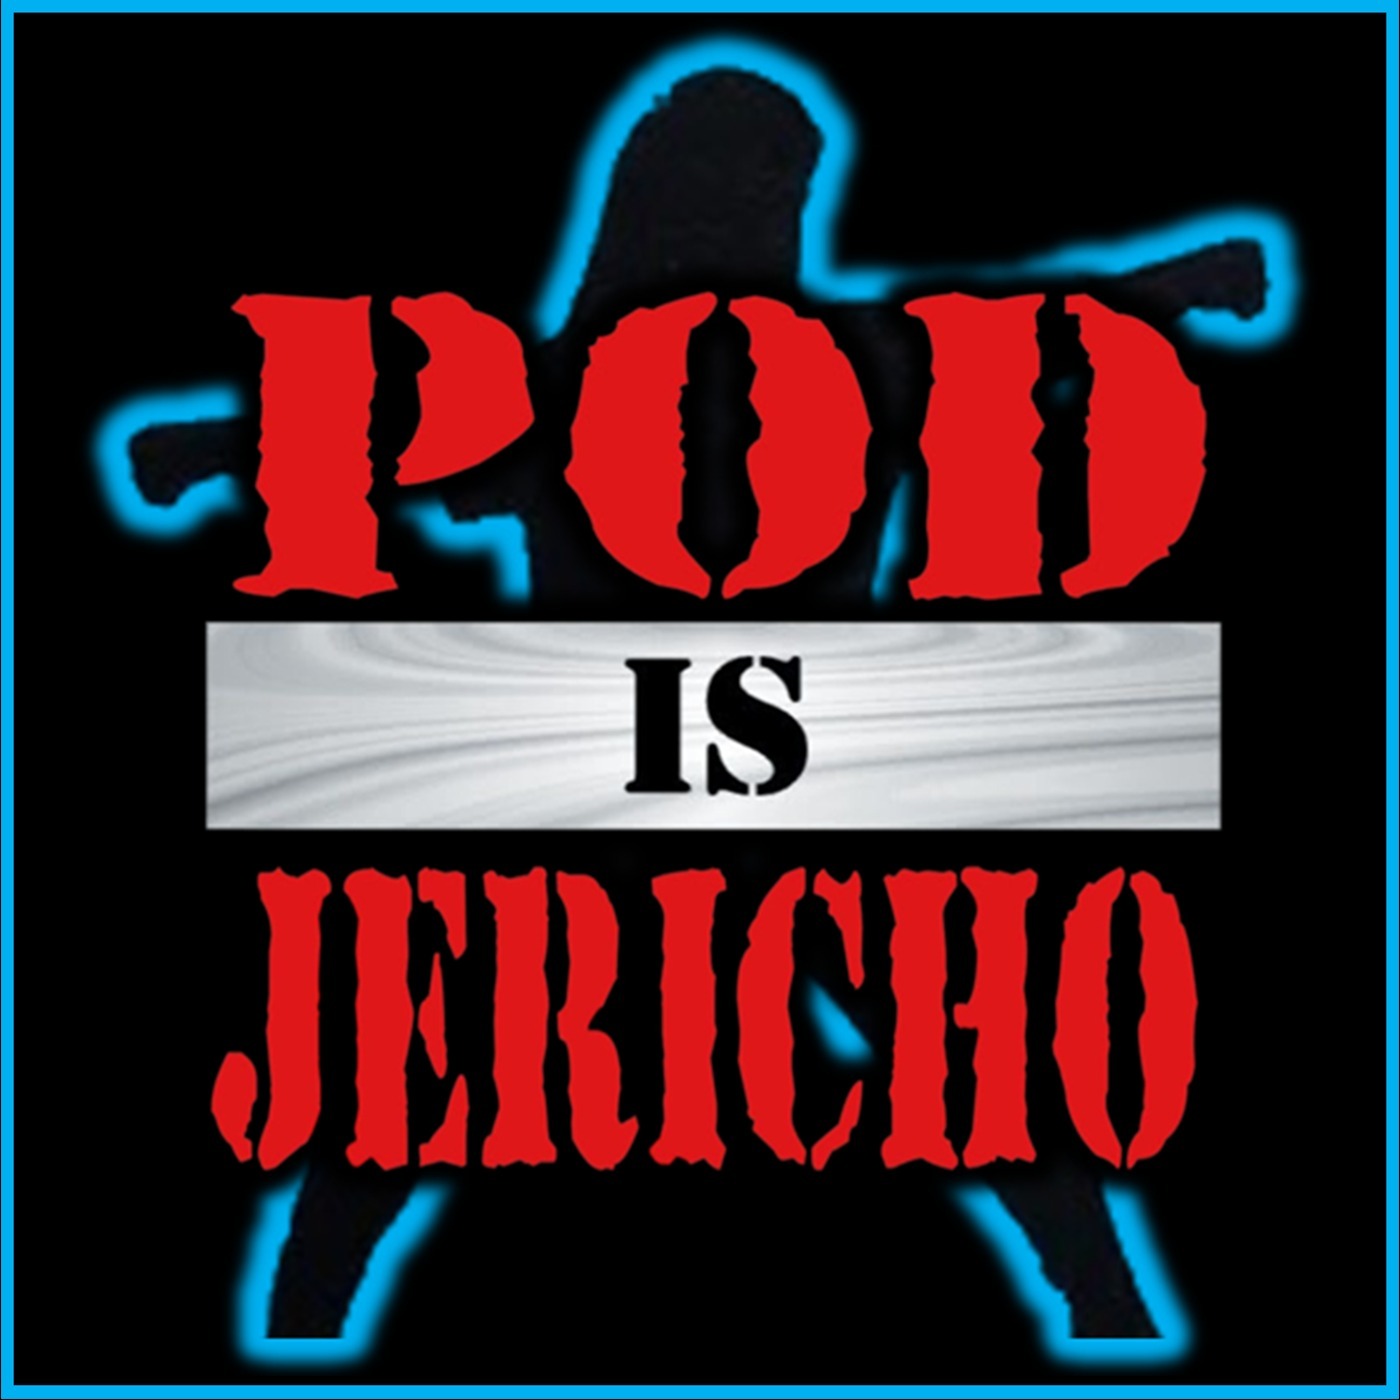 Pod. Is. Jericho